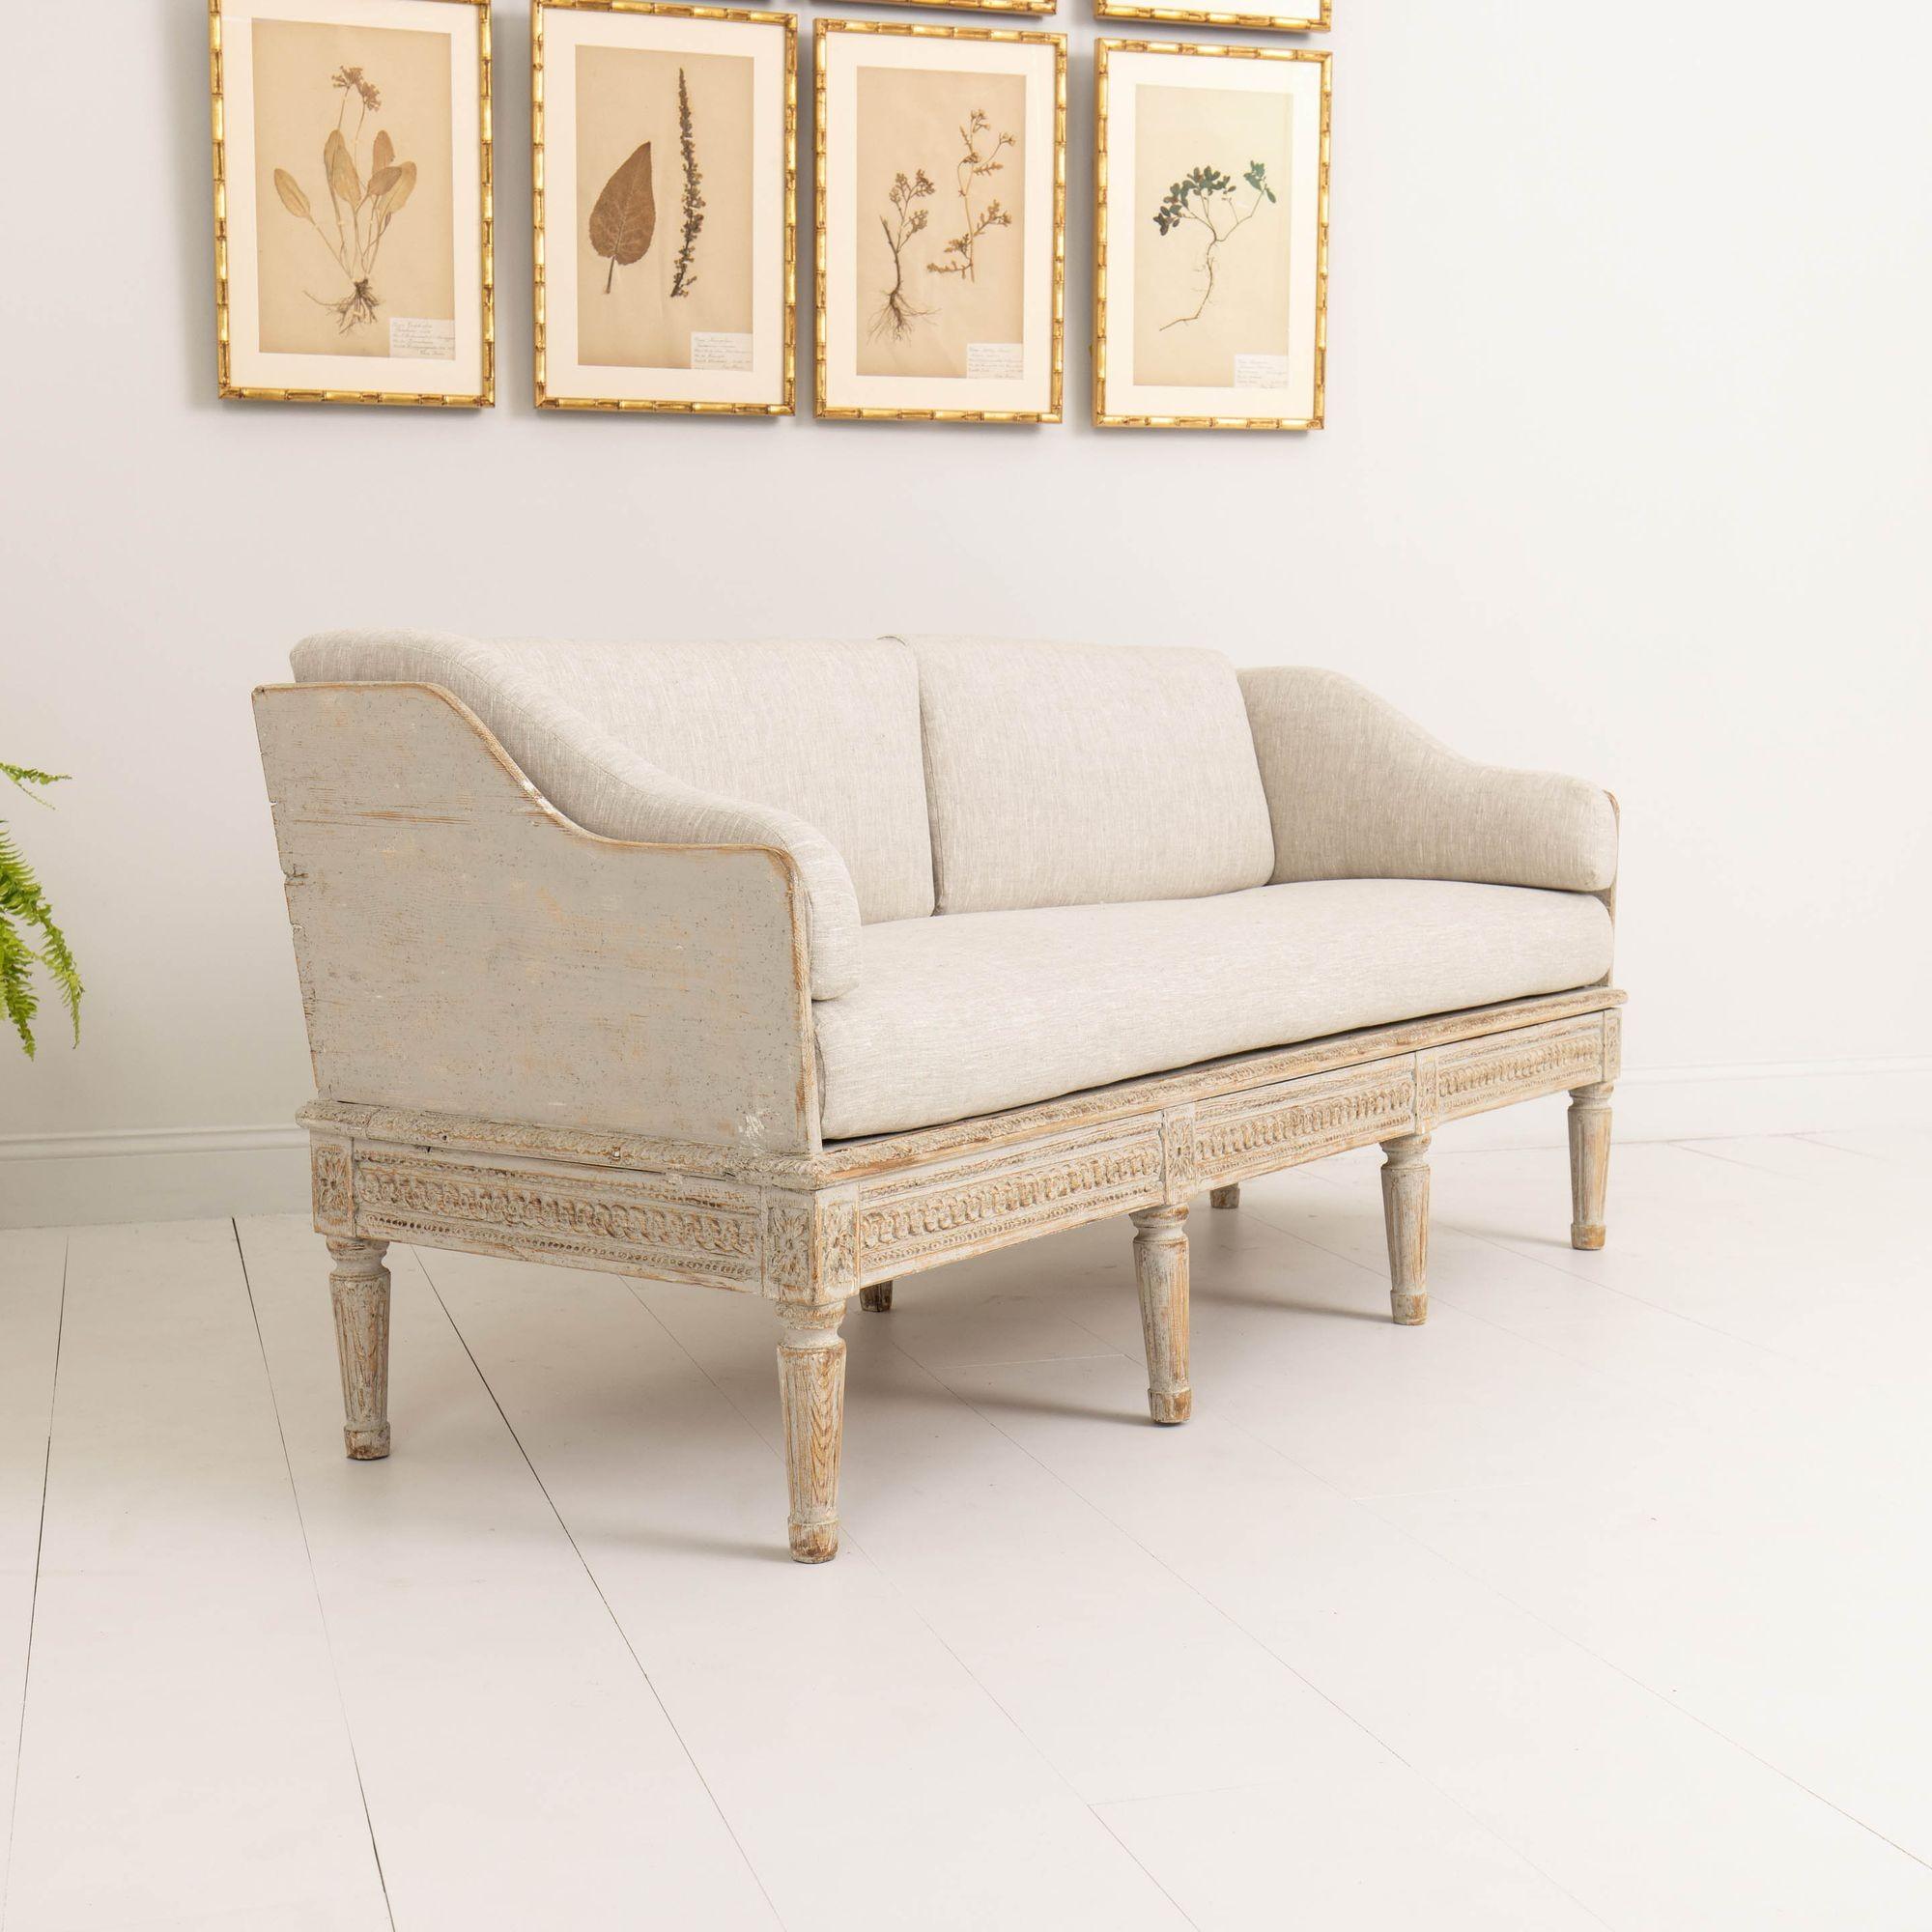 18th c. Swedish Gustavian Period Painted Sofa 'Trägsoffa' For Sale 2